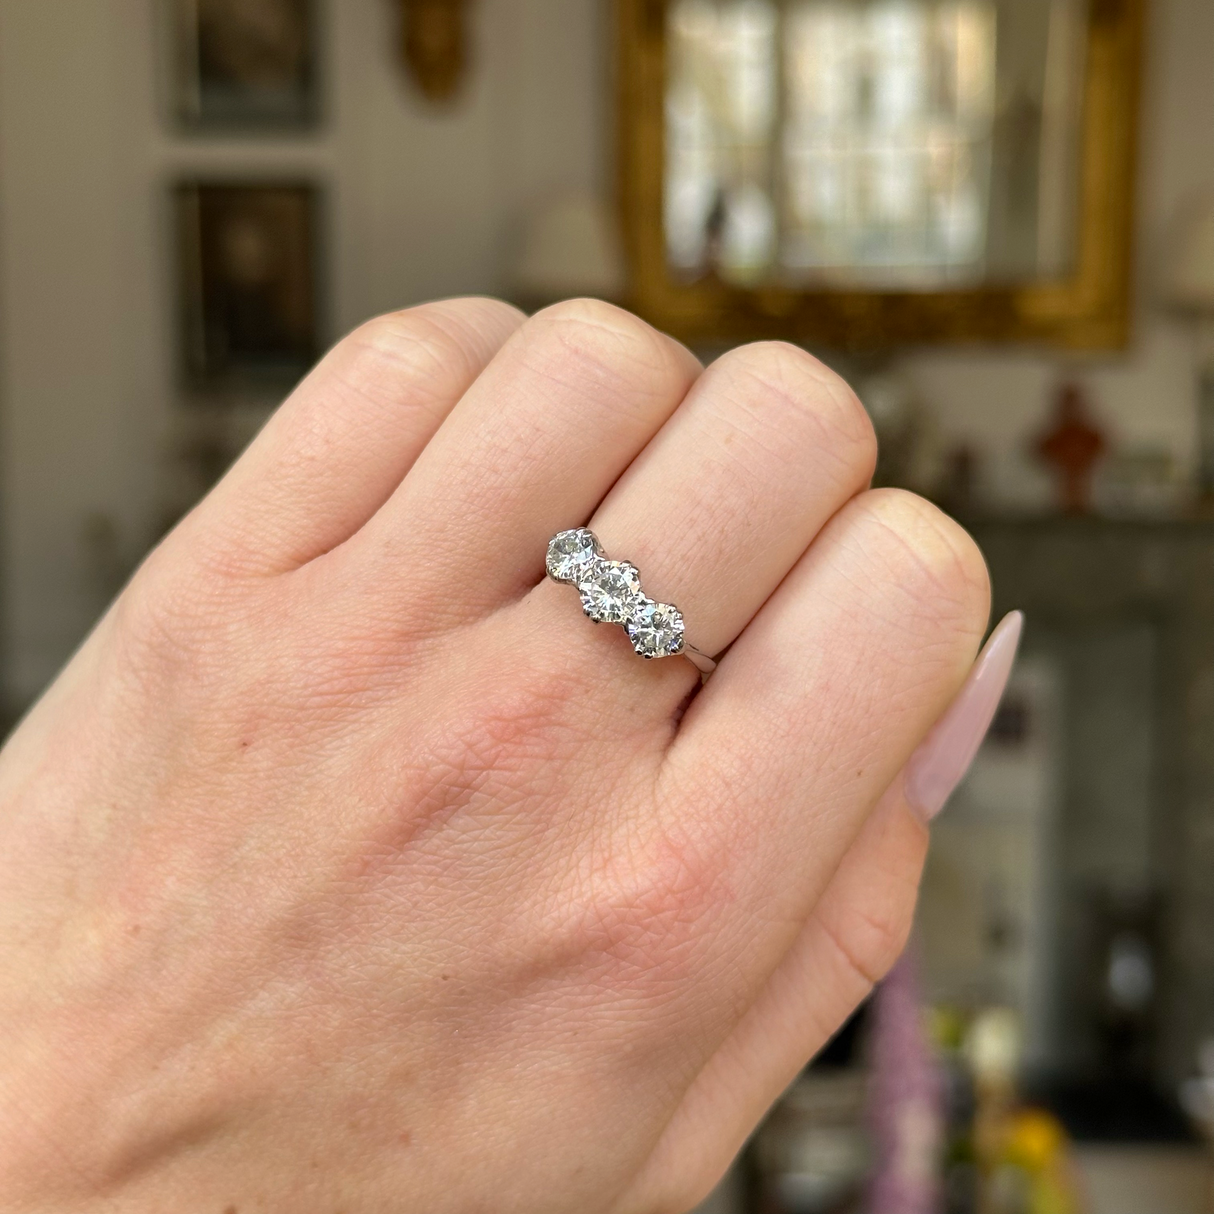 Vintage three stone diamond engagement ring worn on closed hand. 